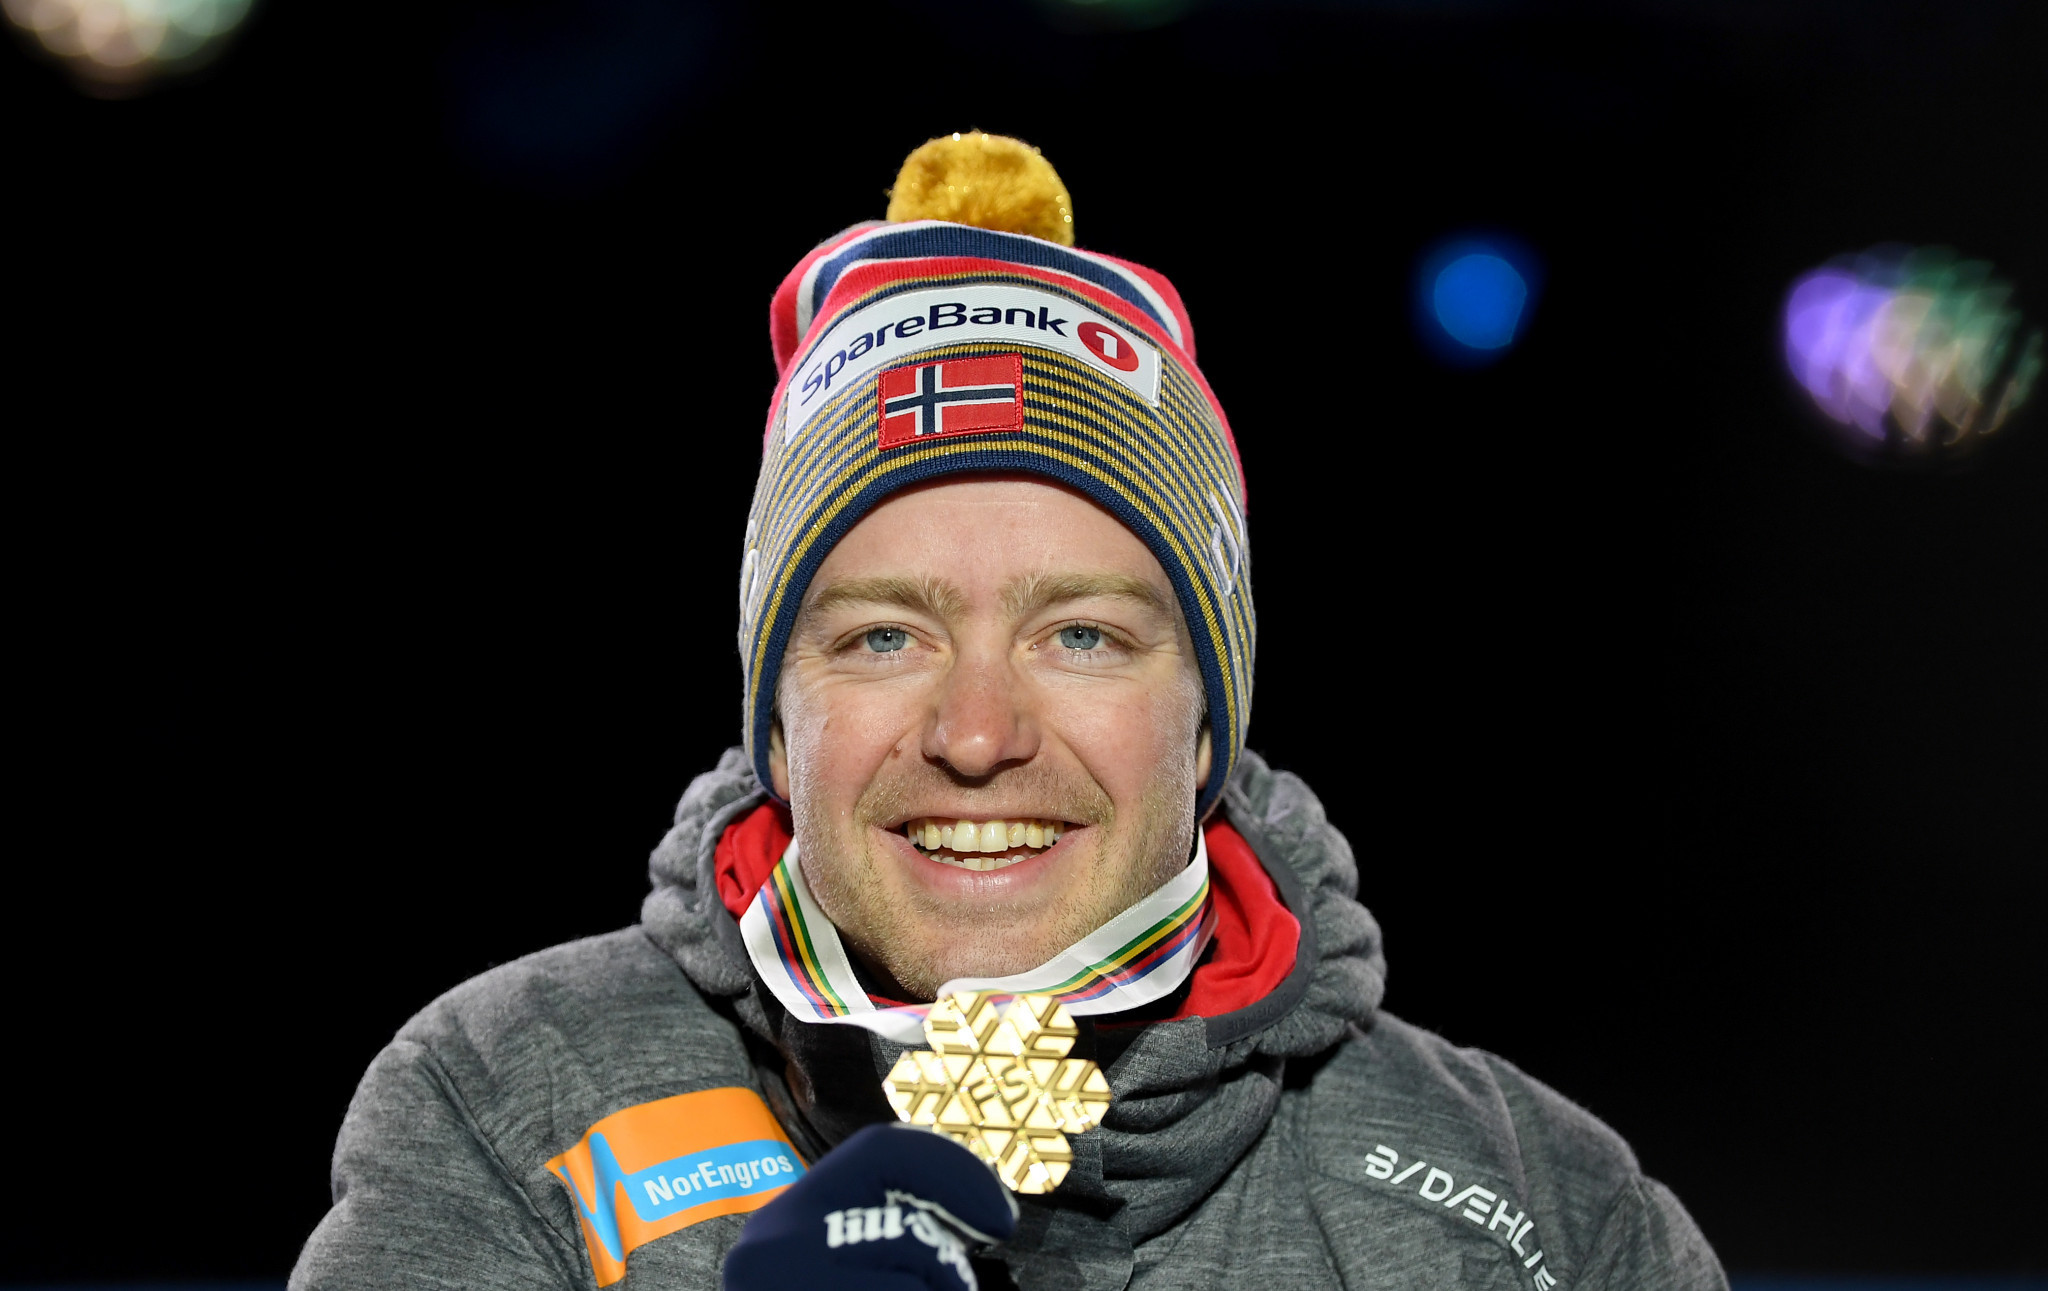 Norway celebrate double skiathlon gold as Eisenbichler earns ski jumping crown at FIS Nordic World Ski Championships